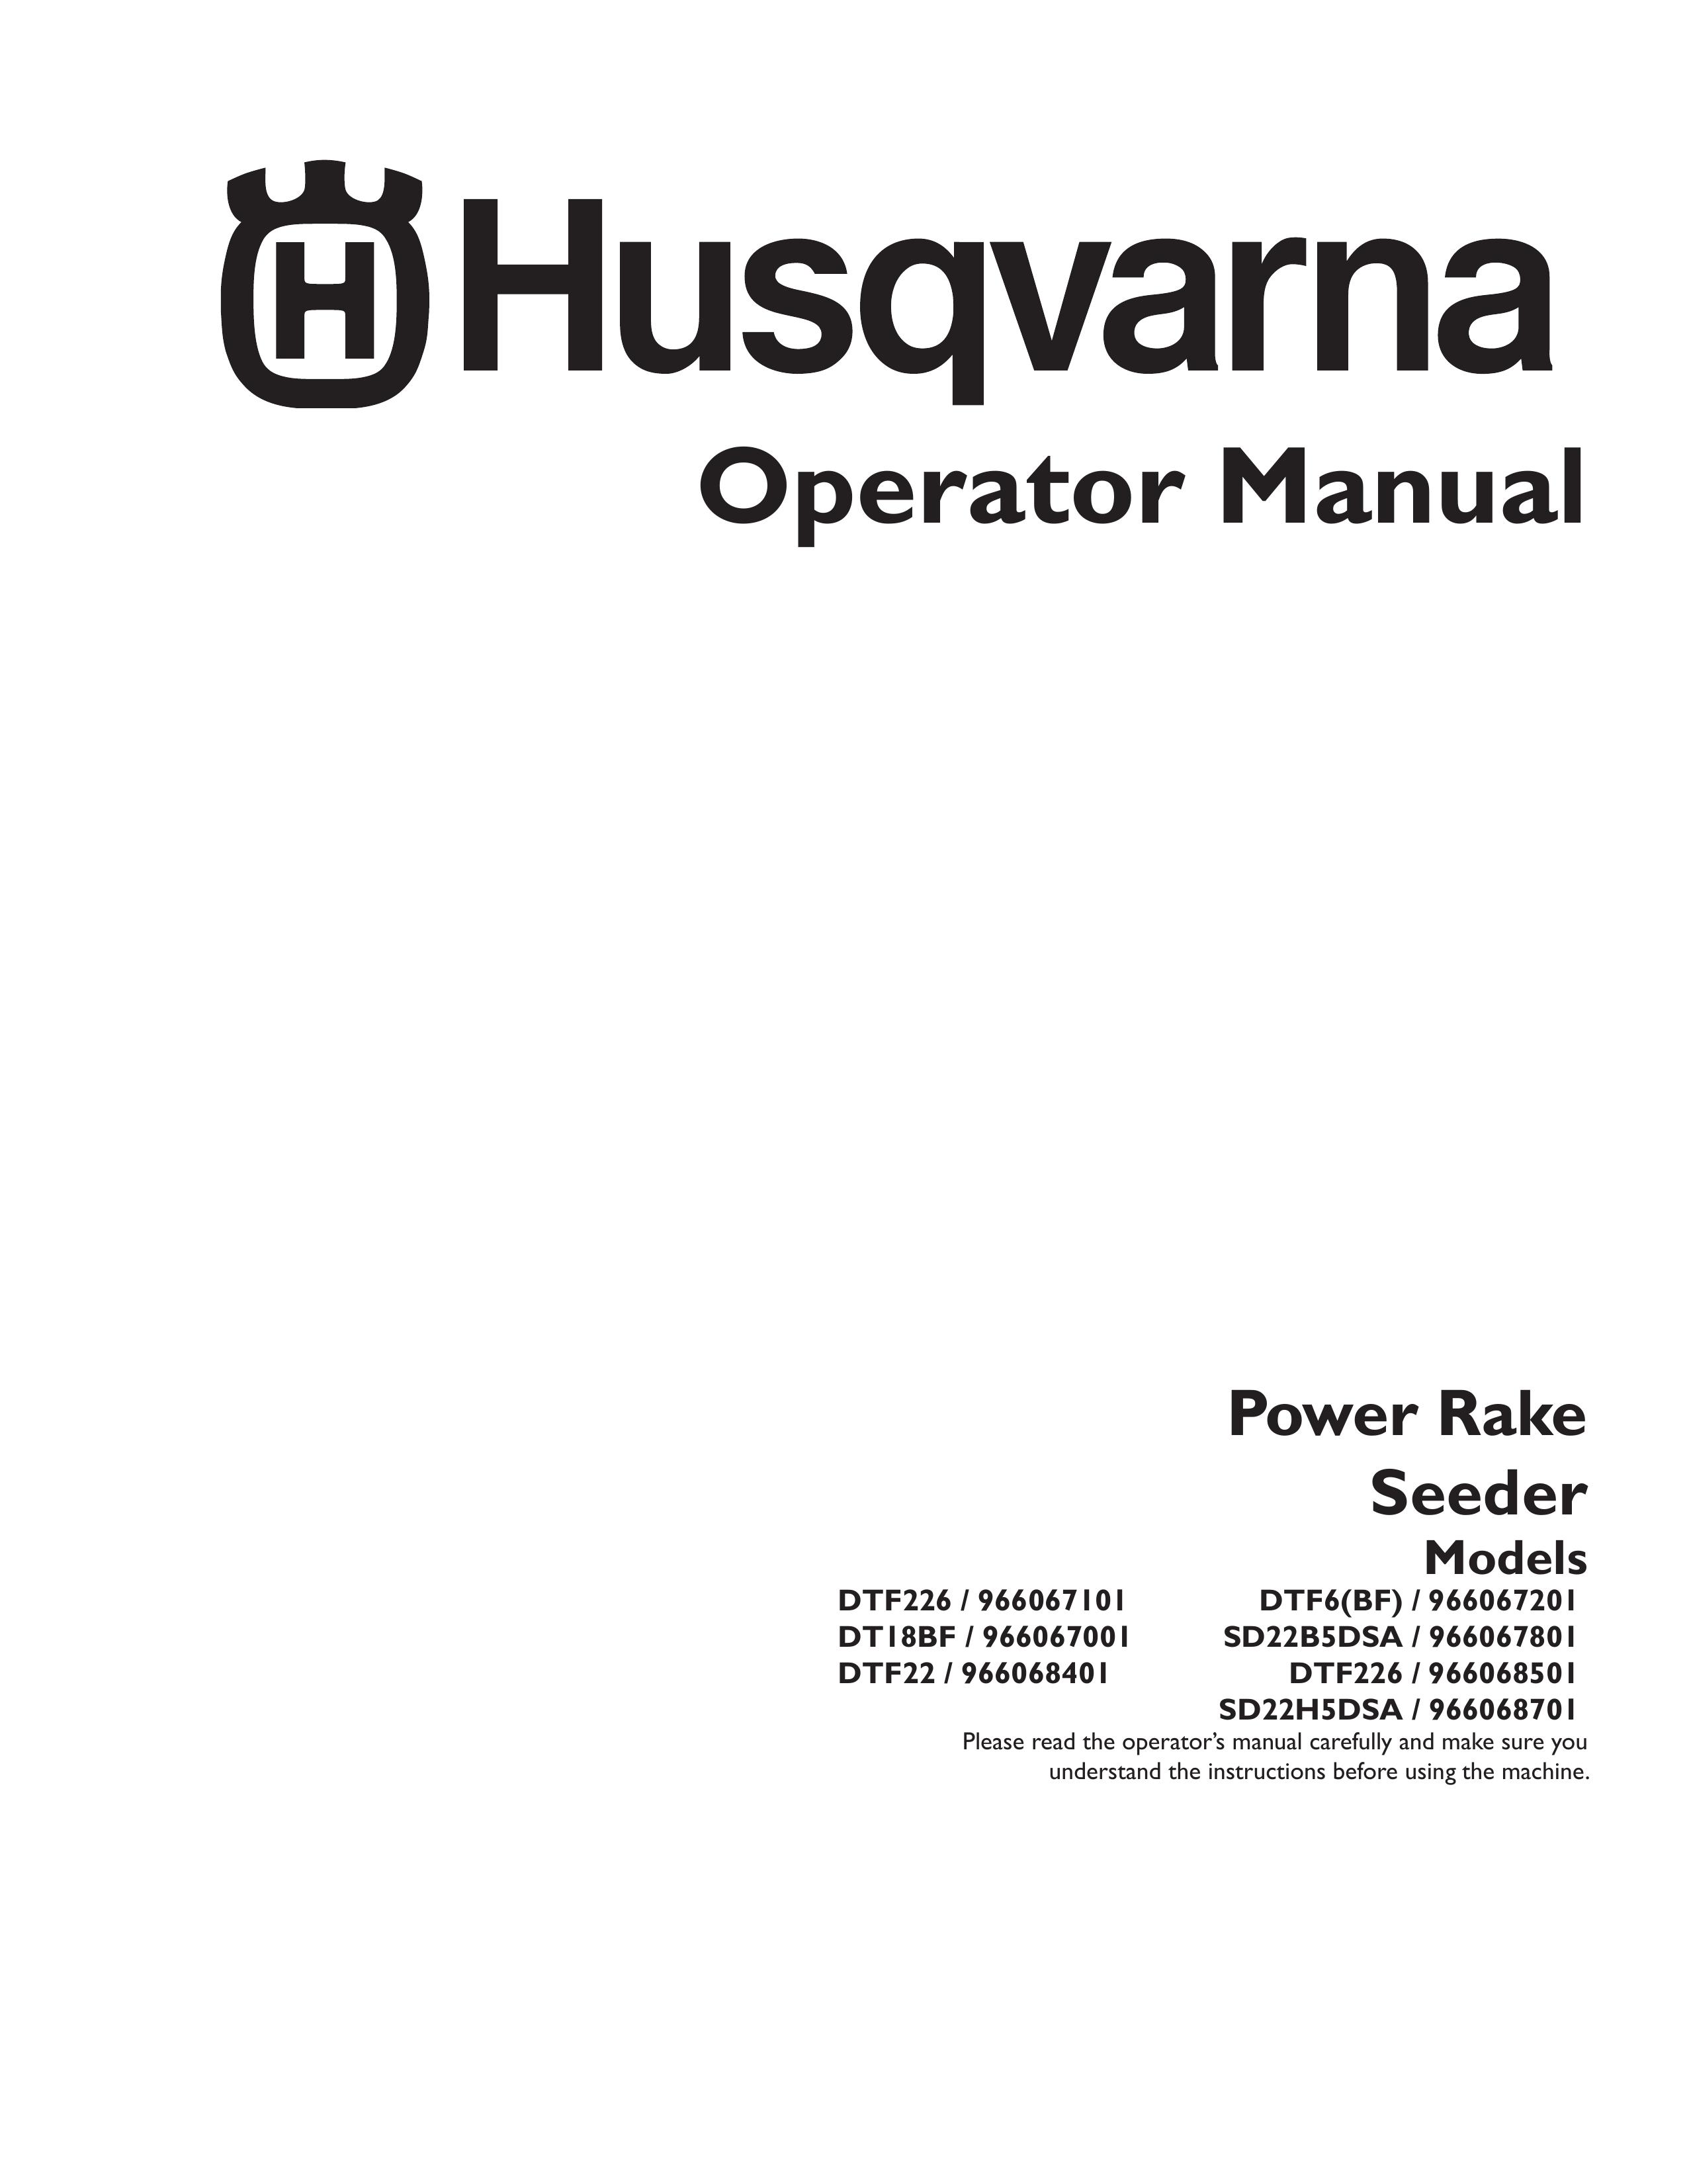 Husqvarna DTF226 Spreader User Manual